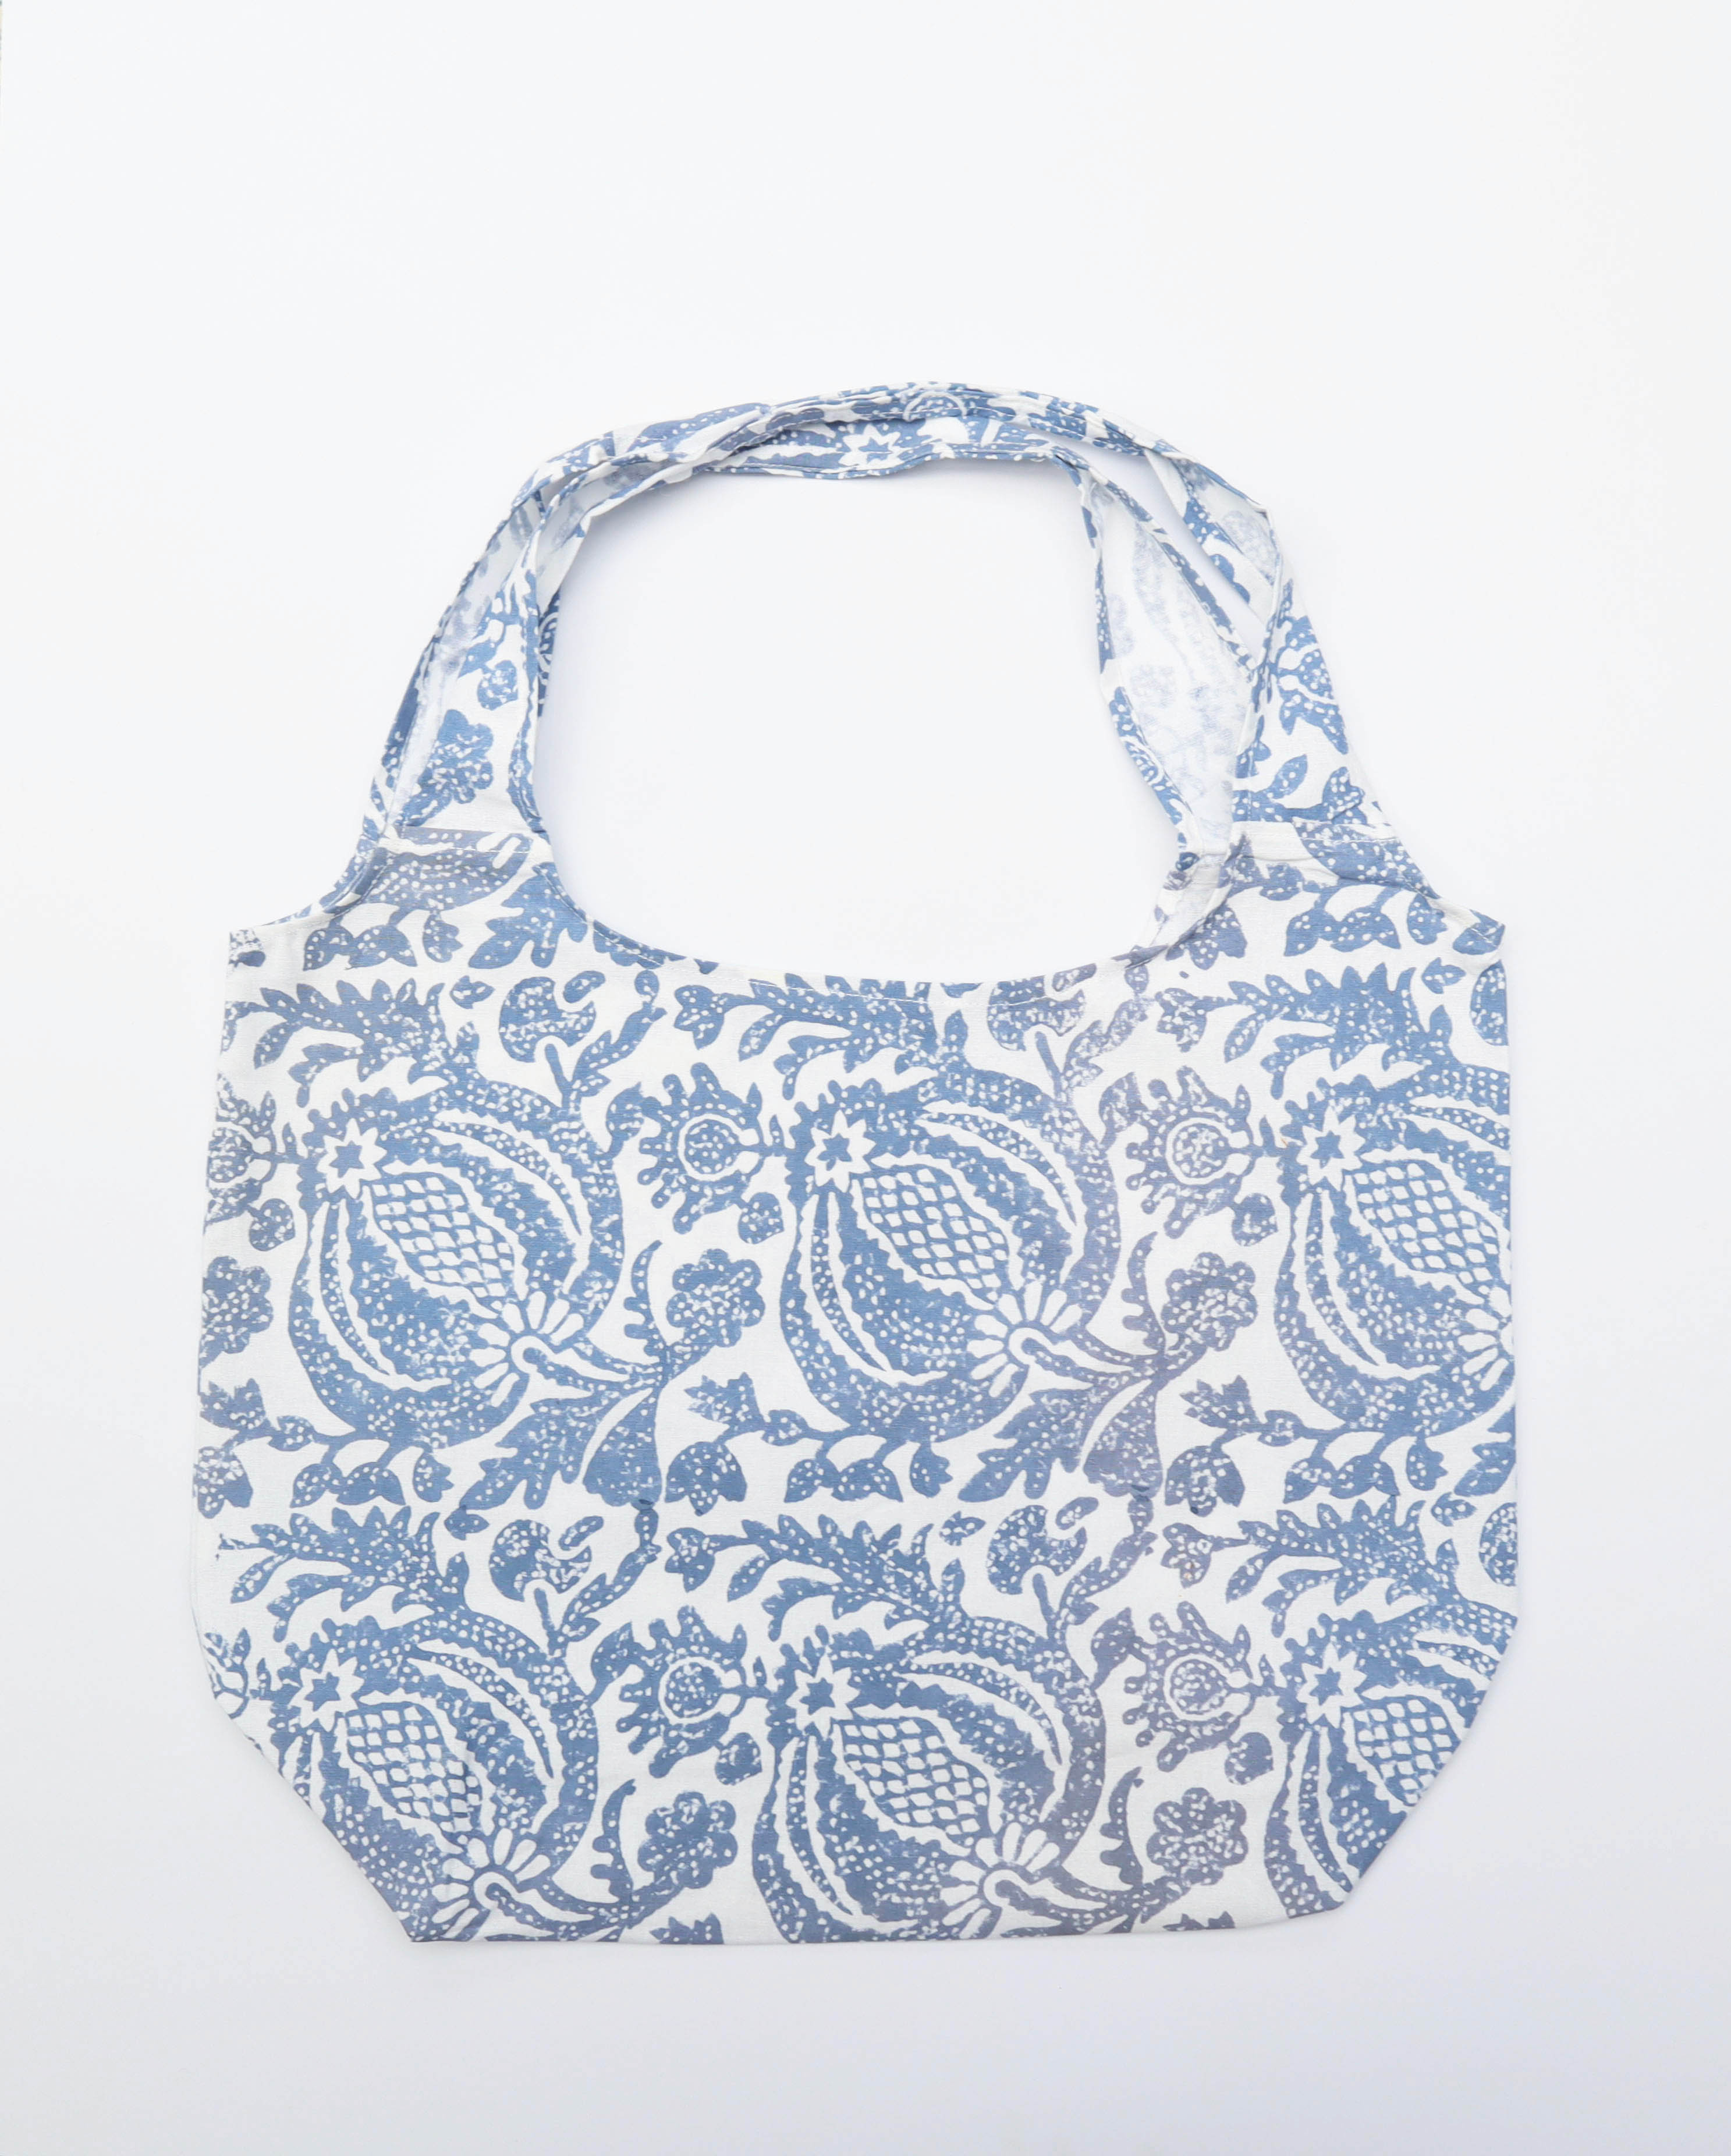 Indigo & Wills Matisse Blue Pomegranate shopping bag